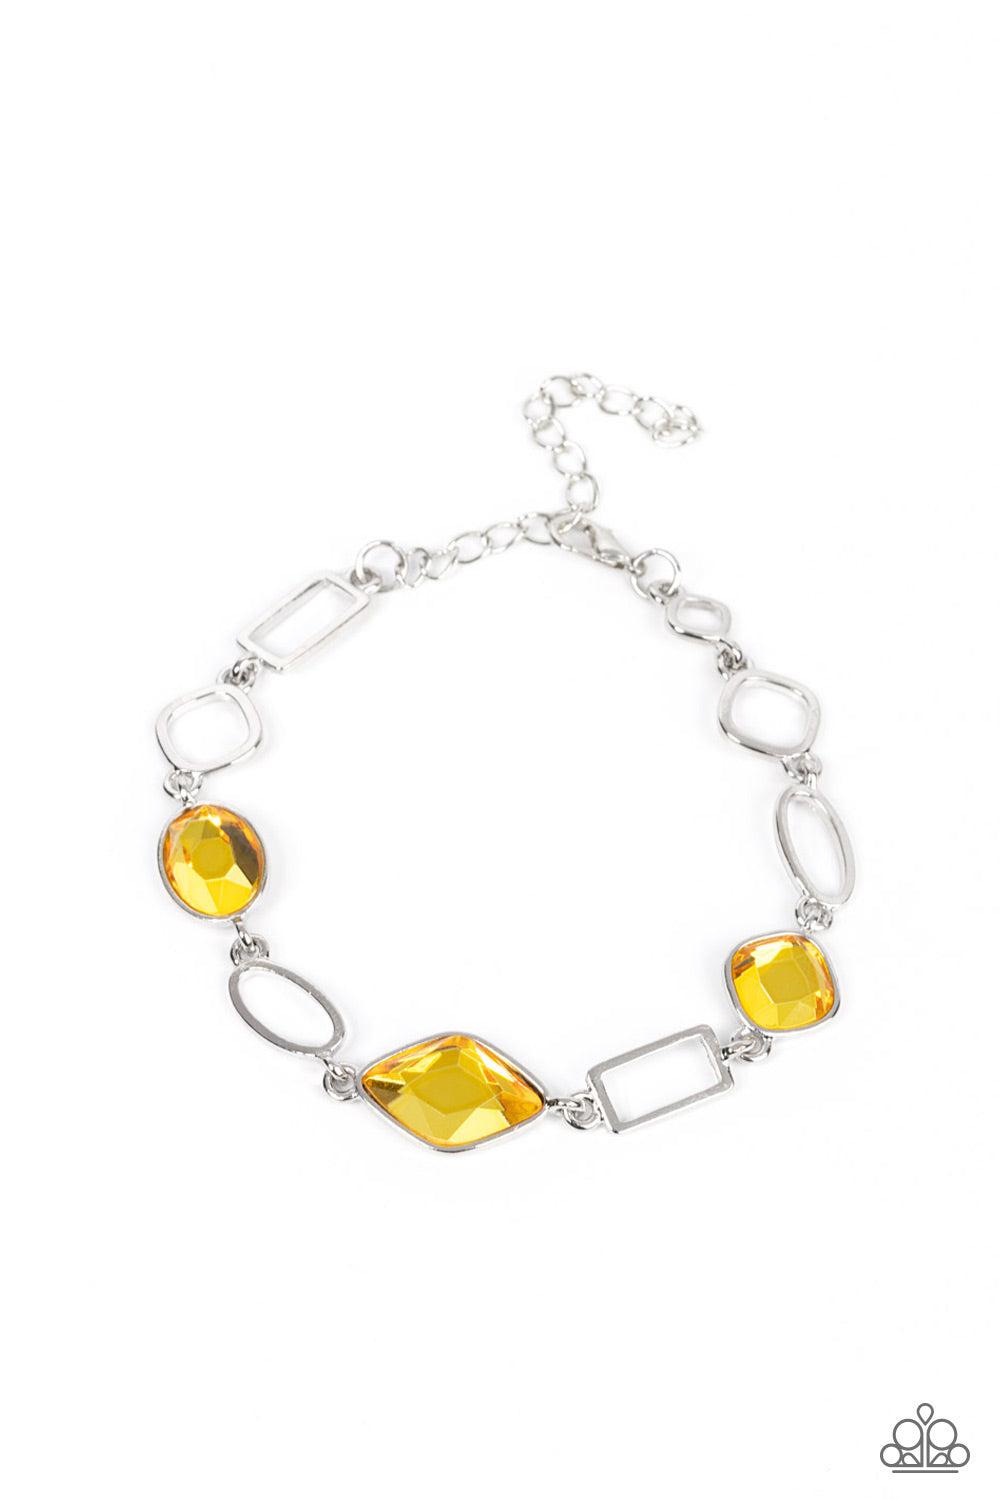 Dazzle for Days Yellow Rhinestone Bracelet - Paparazzi Accessories- lightbox - CarasShop.com - $5 Jewelry by Cara Jewels